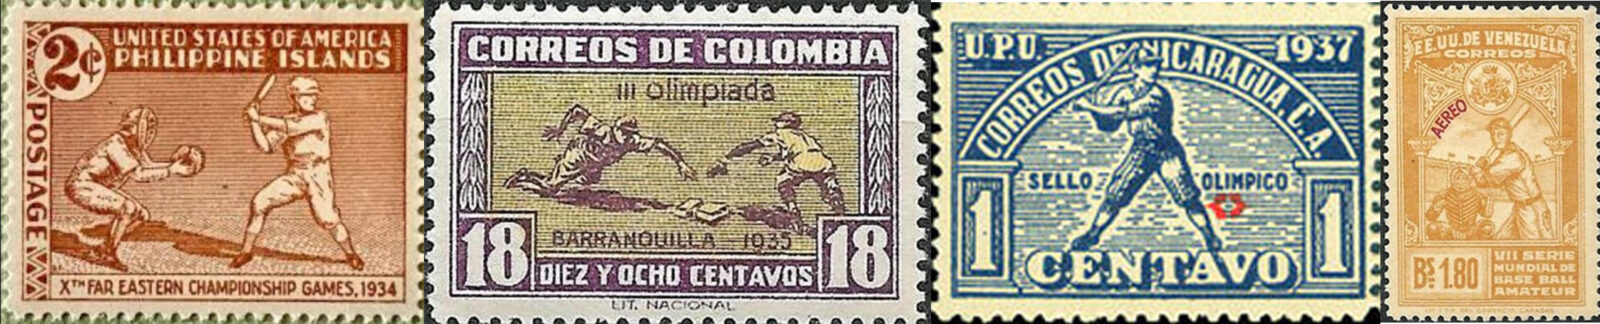 International Baseball Postage Stamps